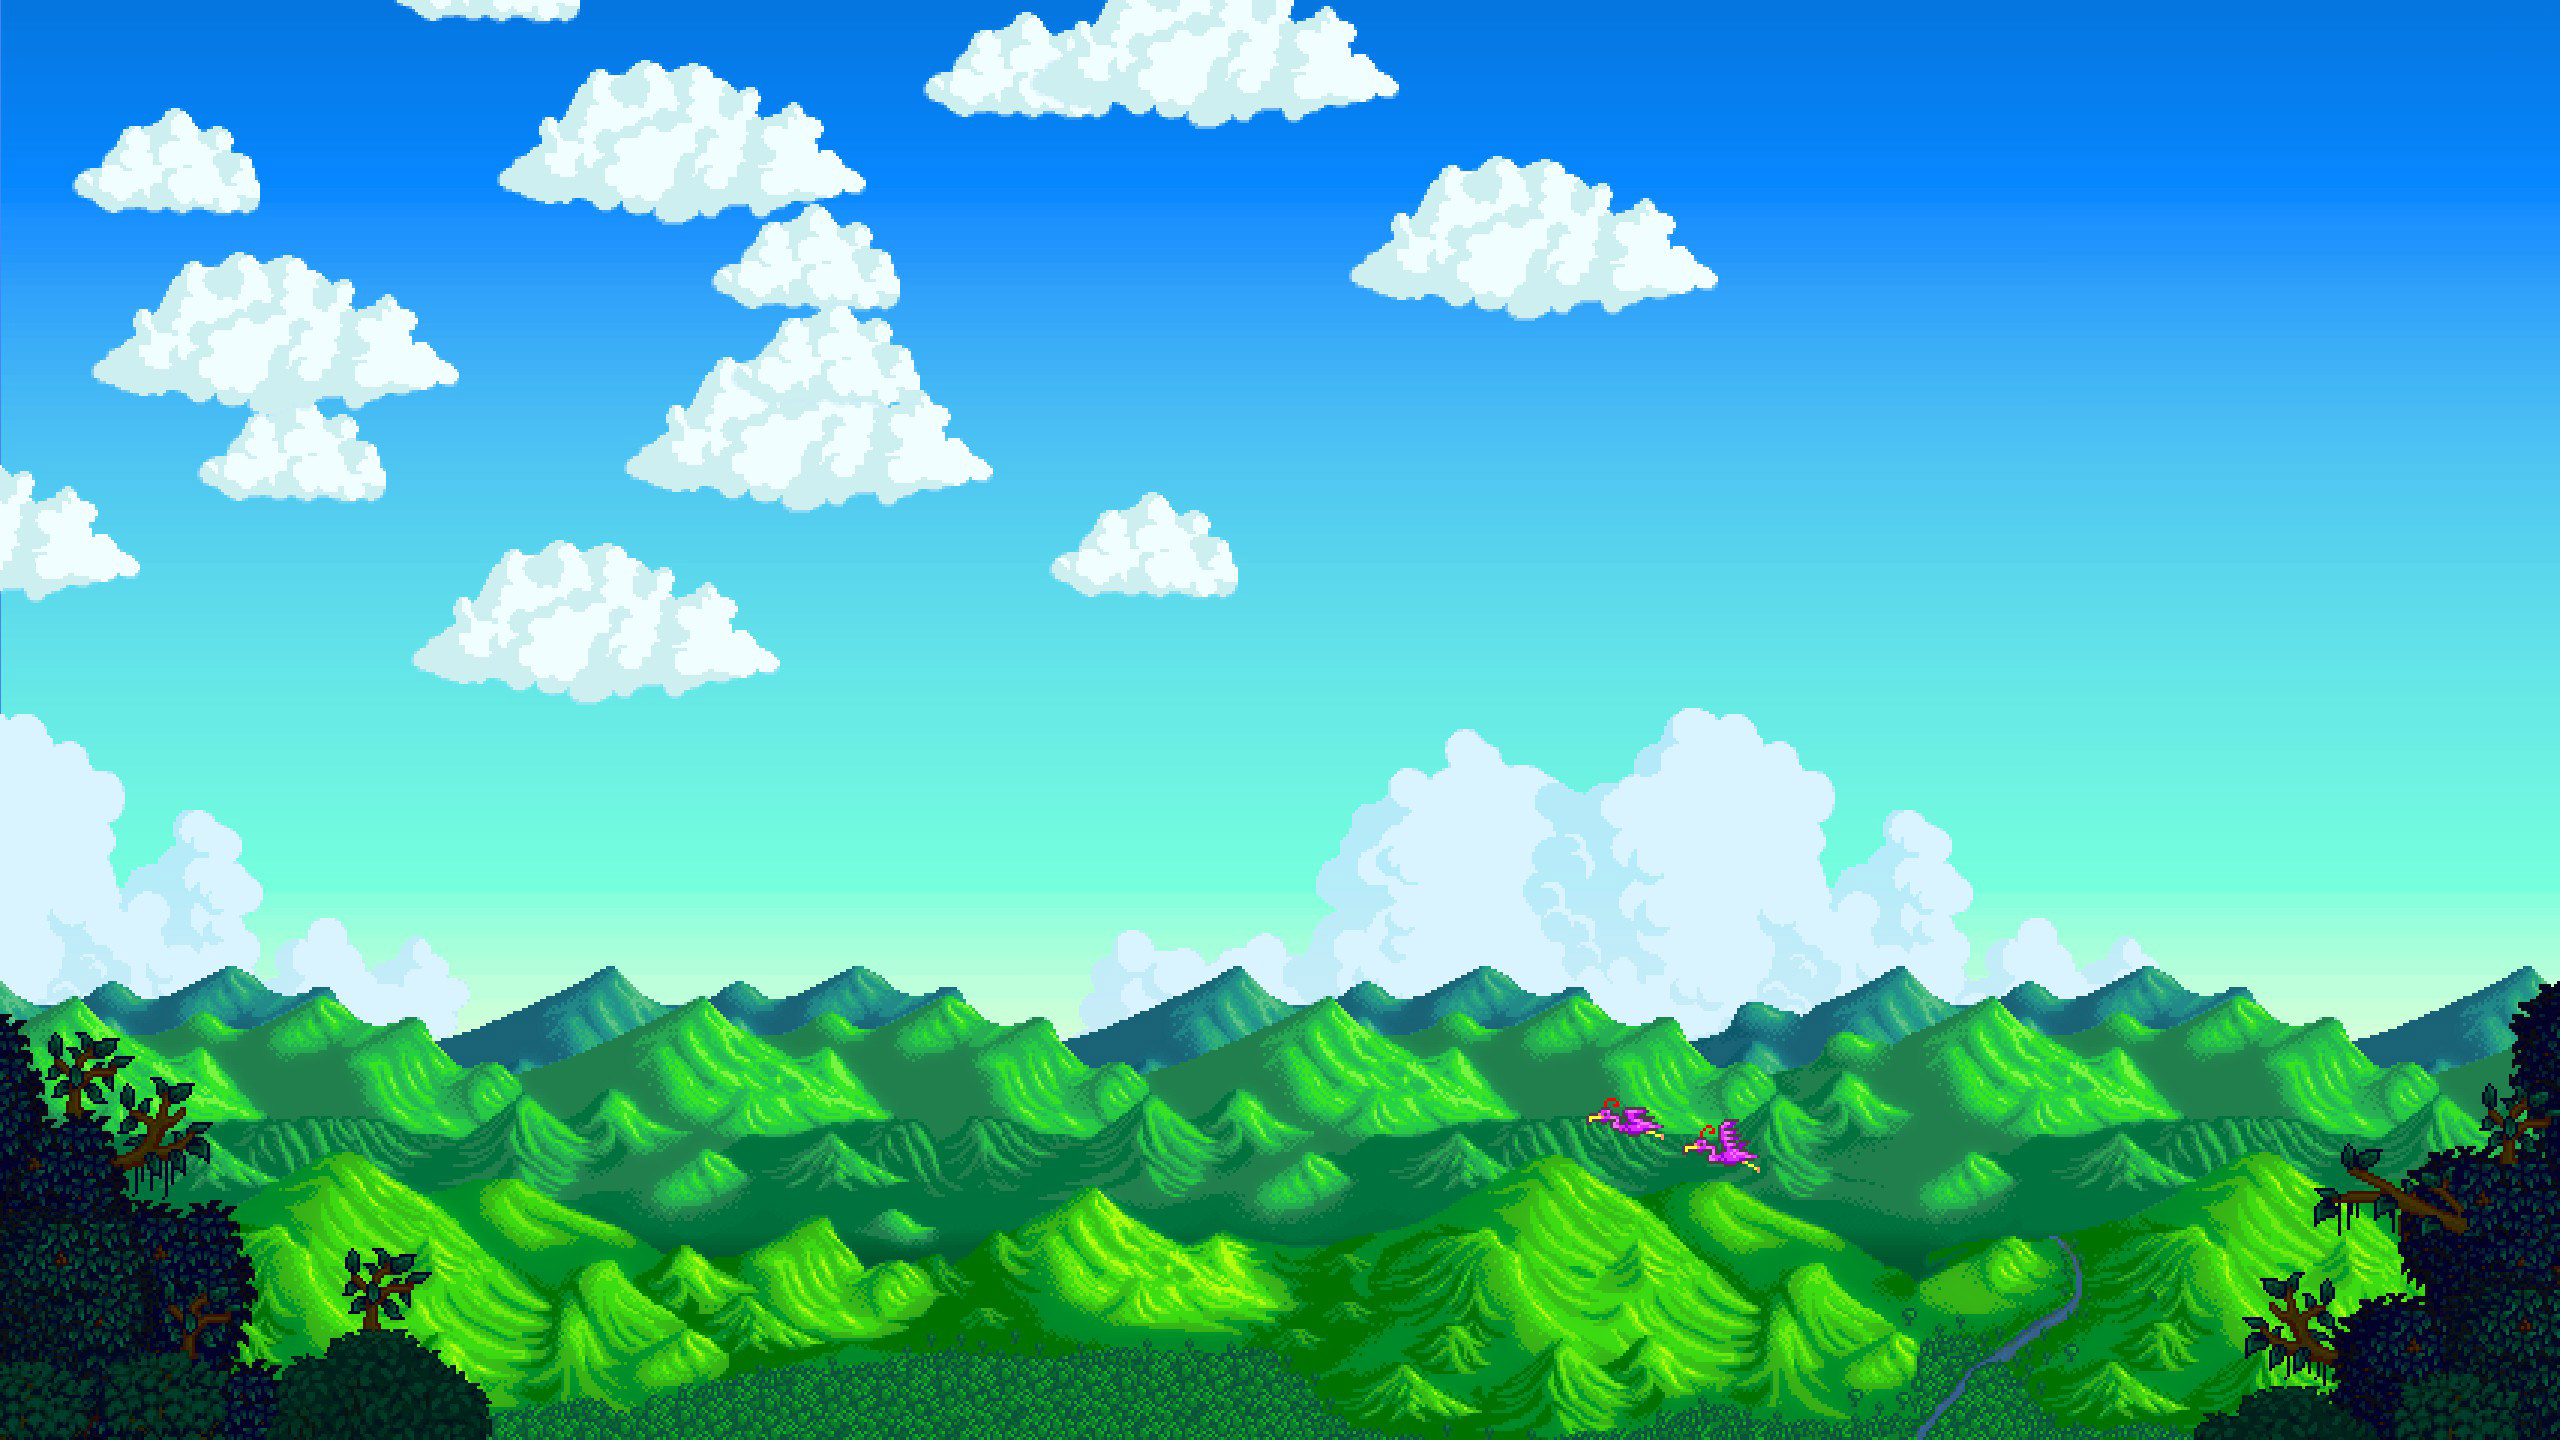 Pixel Art Pixelated Pixels Digital Art Stardew Valley Clouds Mountains Forest Flamingos Landscape 2560x1440